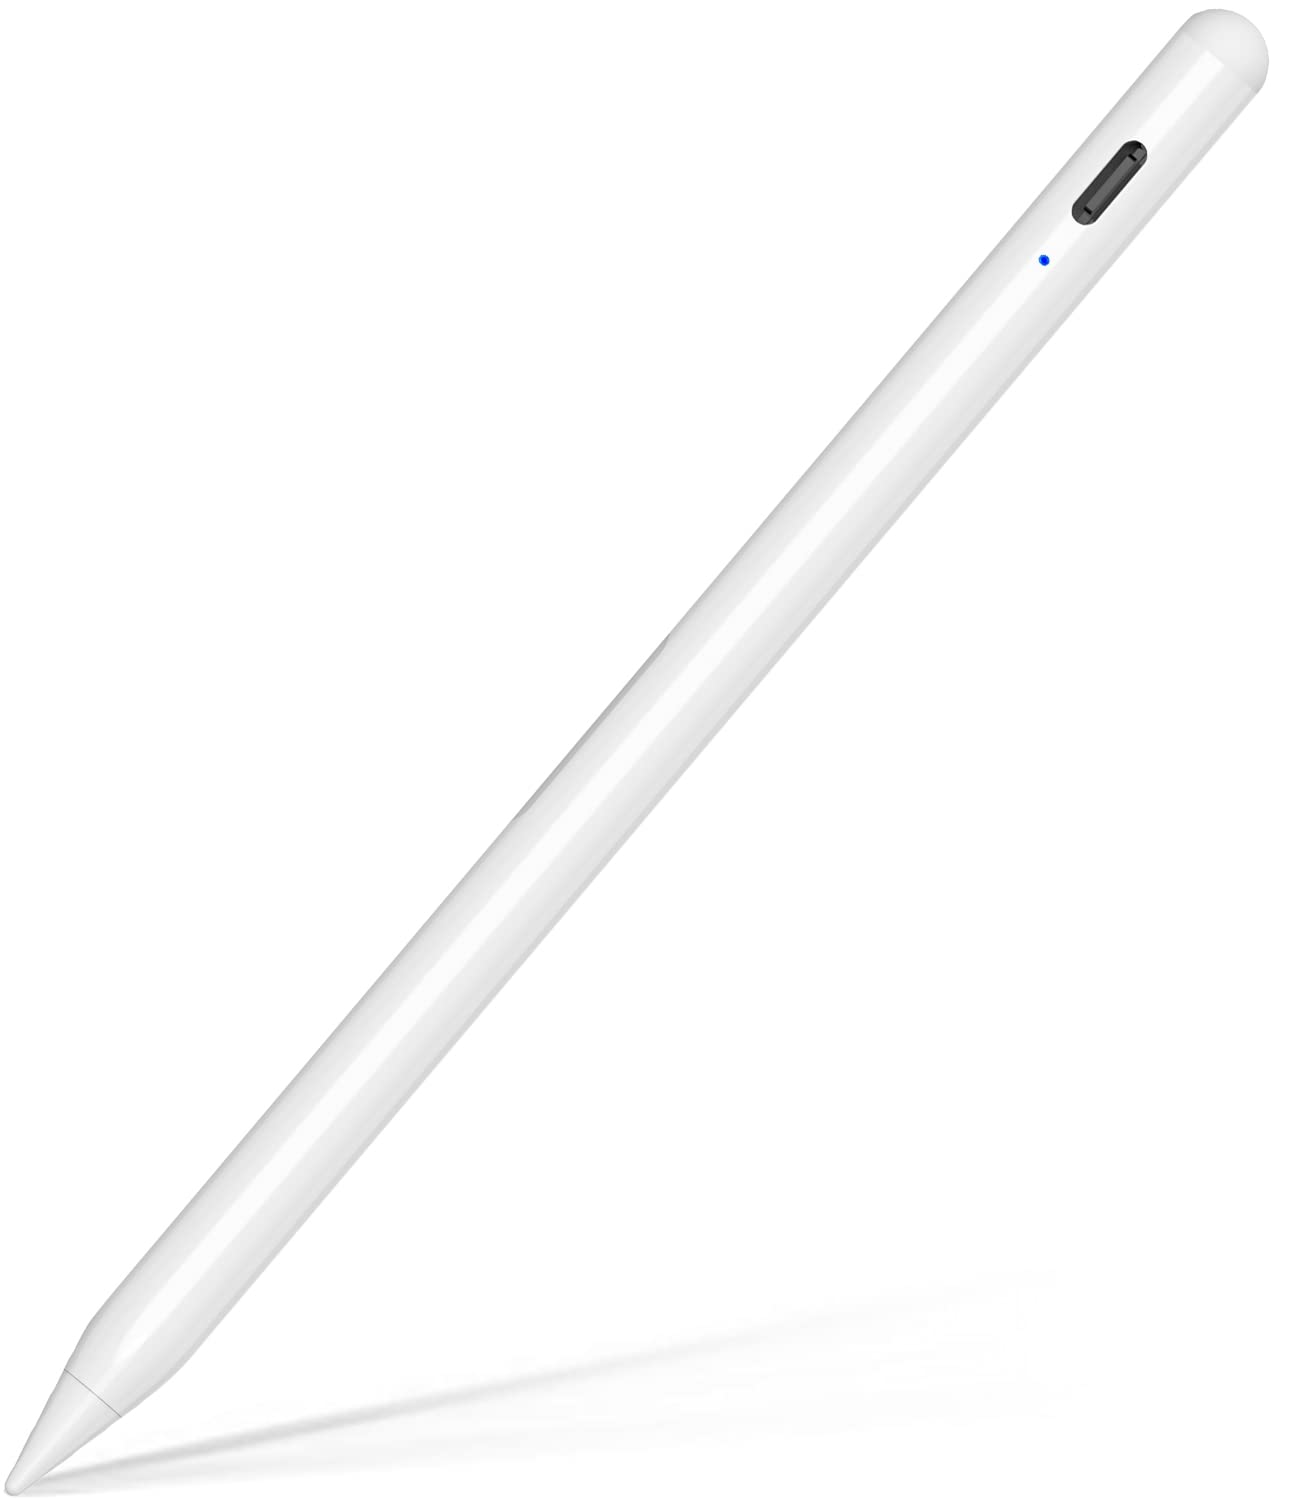 قلم لمسی اپل مدل Pencil 2nd Generation (USB-C)